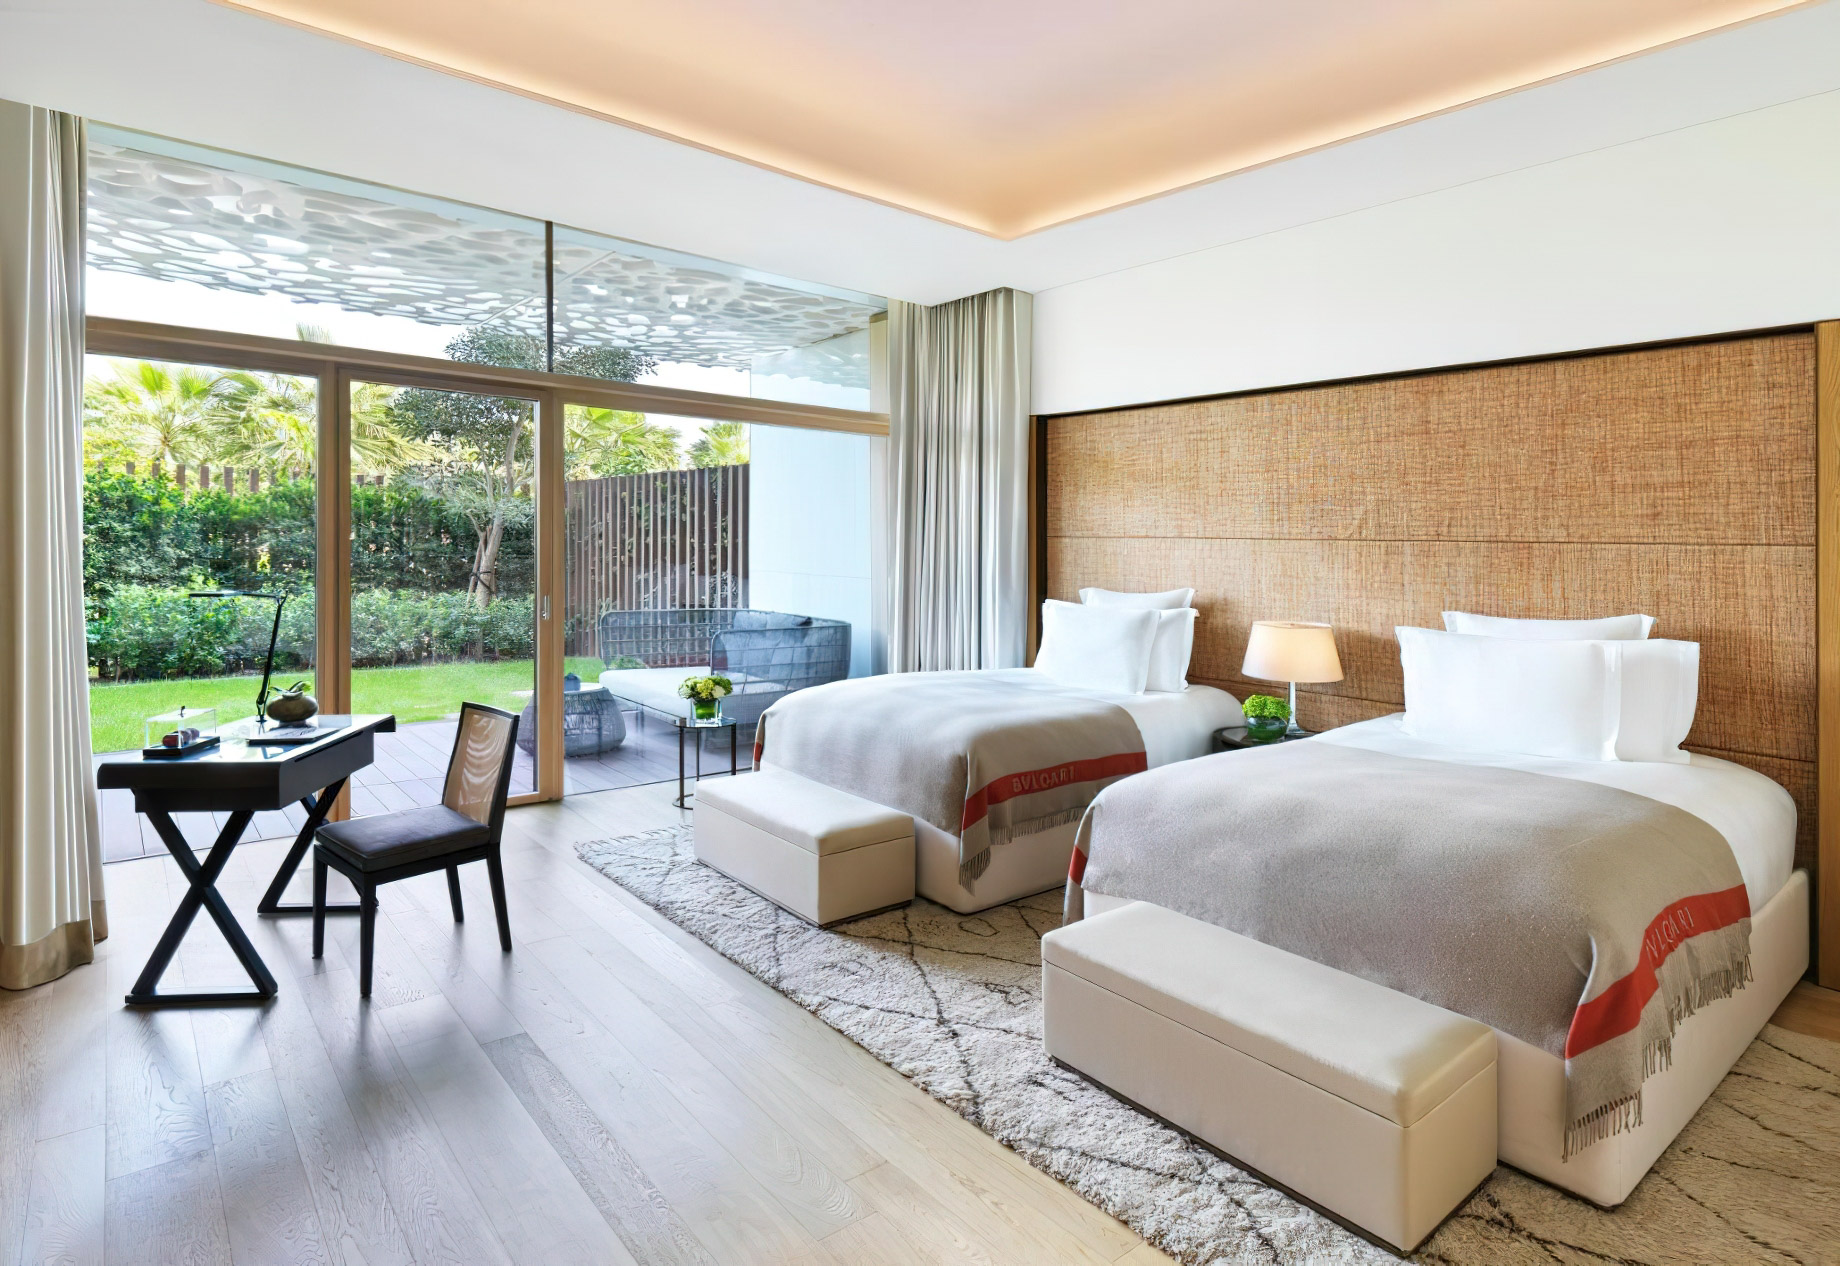 Bvlgari Resort Dubai – Jumeira Bay Island, Dubai, UAE – Guest Suite Bedroom Garden View